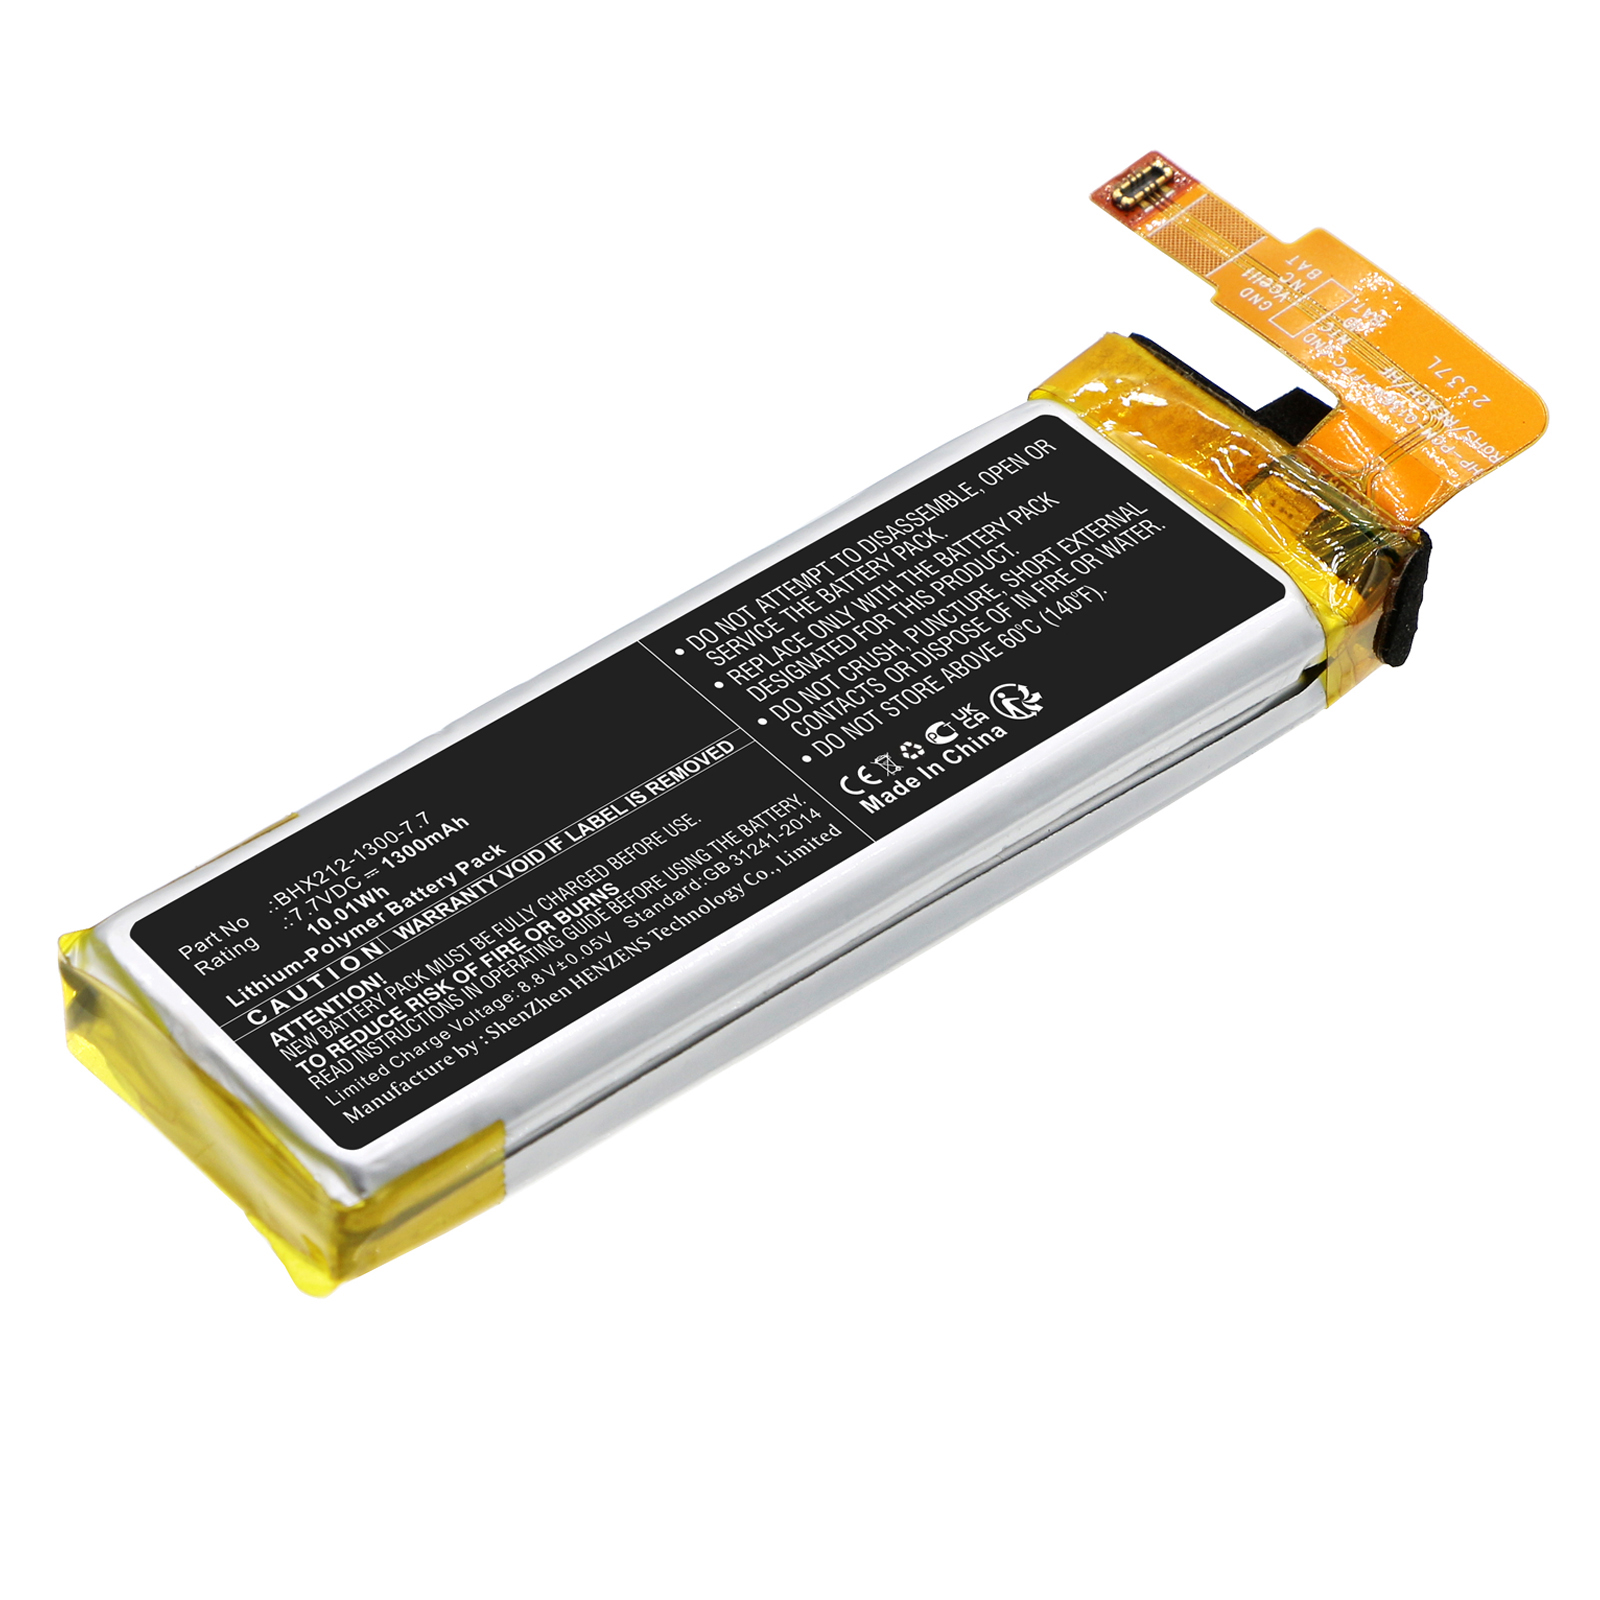 Synergy Digital Digital Camera Battery, Compatible with DJI BHX212-1300-7.7 Digital Camera Battery (Li-Pol, 7.7V, 1300mAh)